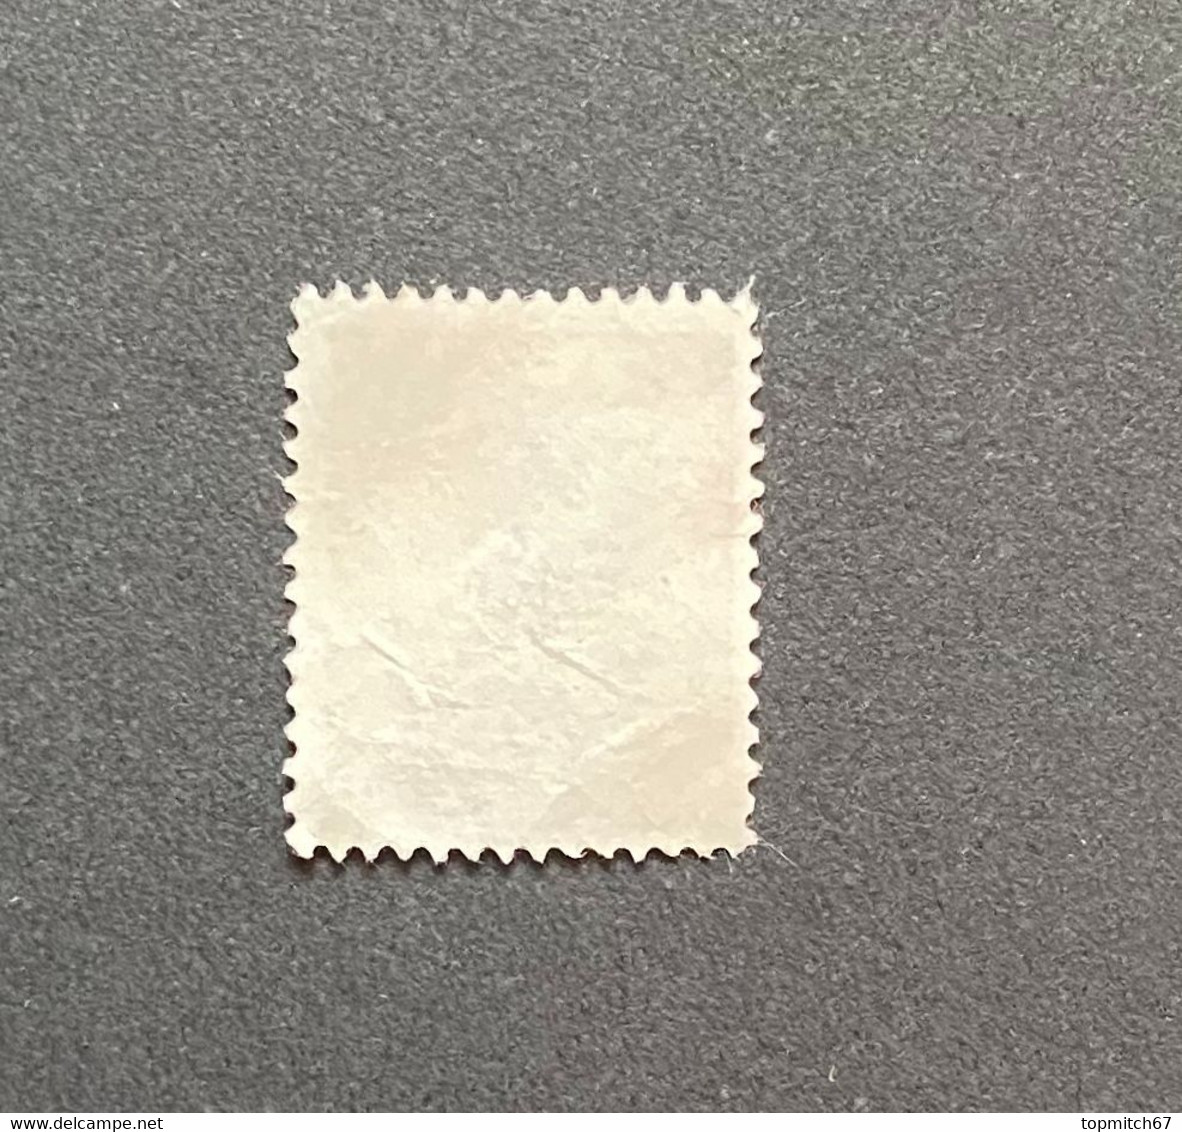 FRAPO108MNH2 - Pre-cancelled Stamp Type Moissonneuse 8 F MNH W/o Gum Stamp 1953 - France YT PO 108 - 1953-1960